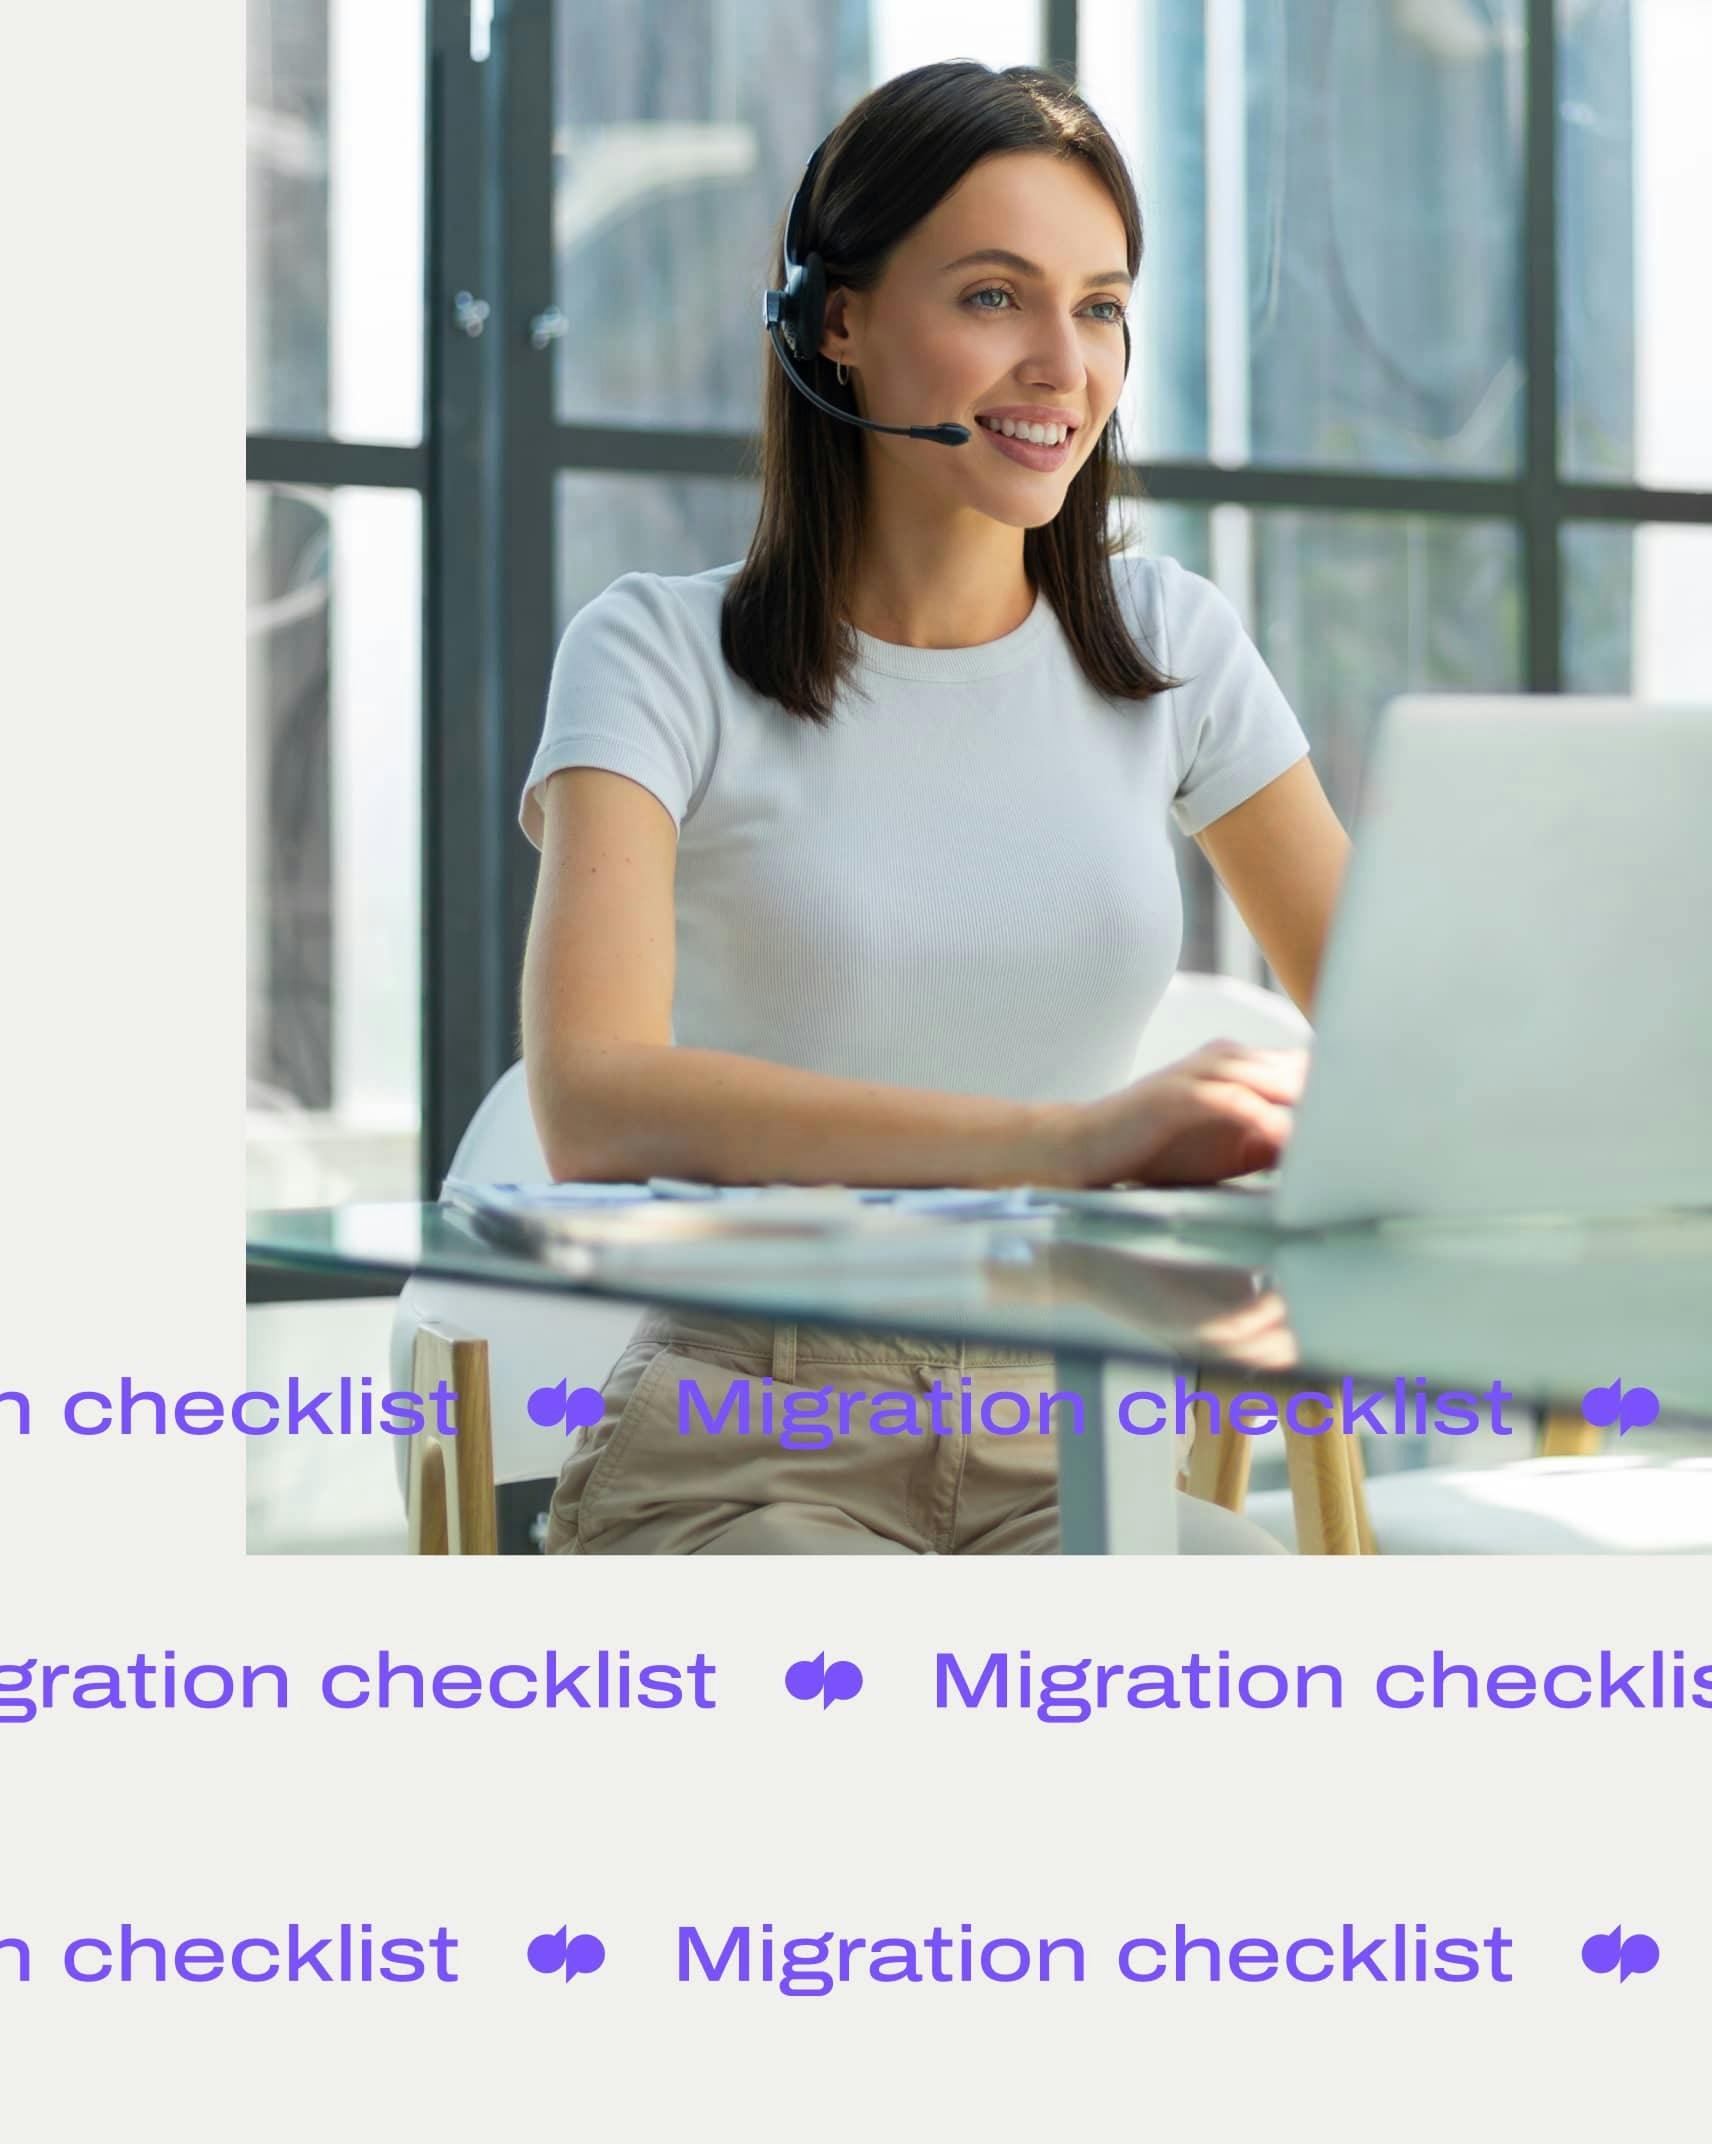 Migration checklist